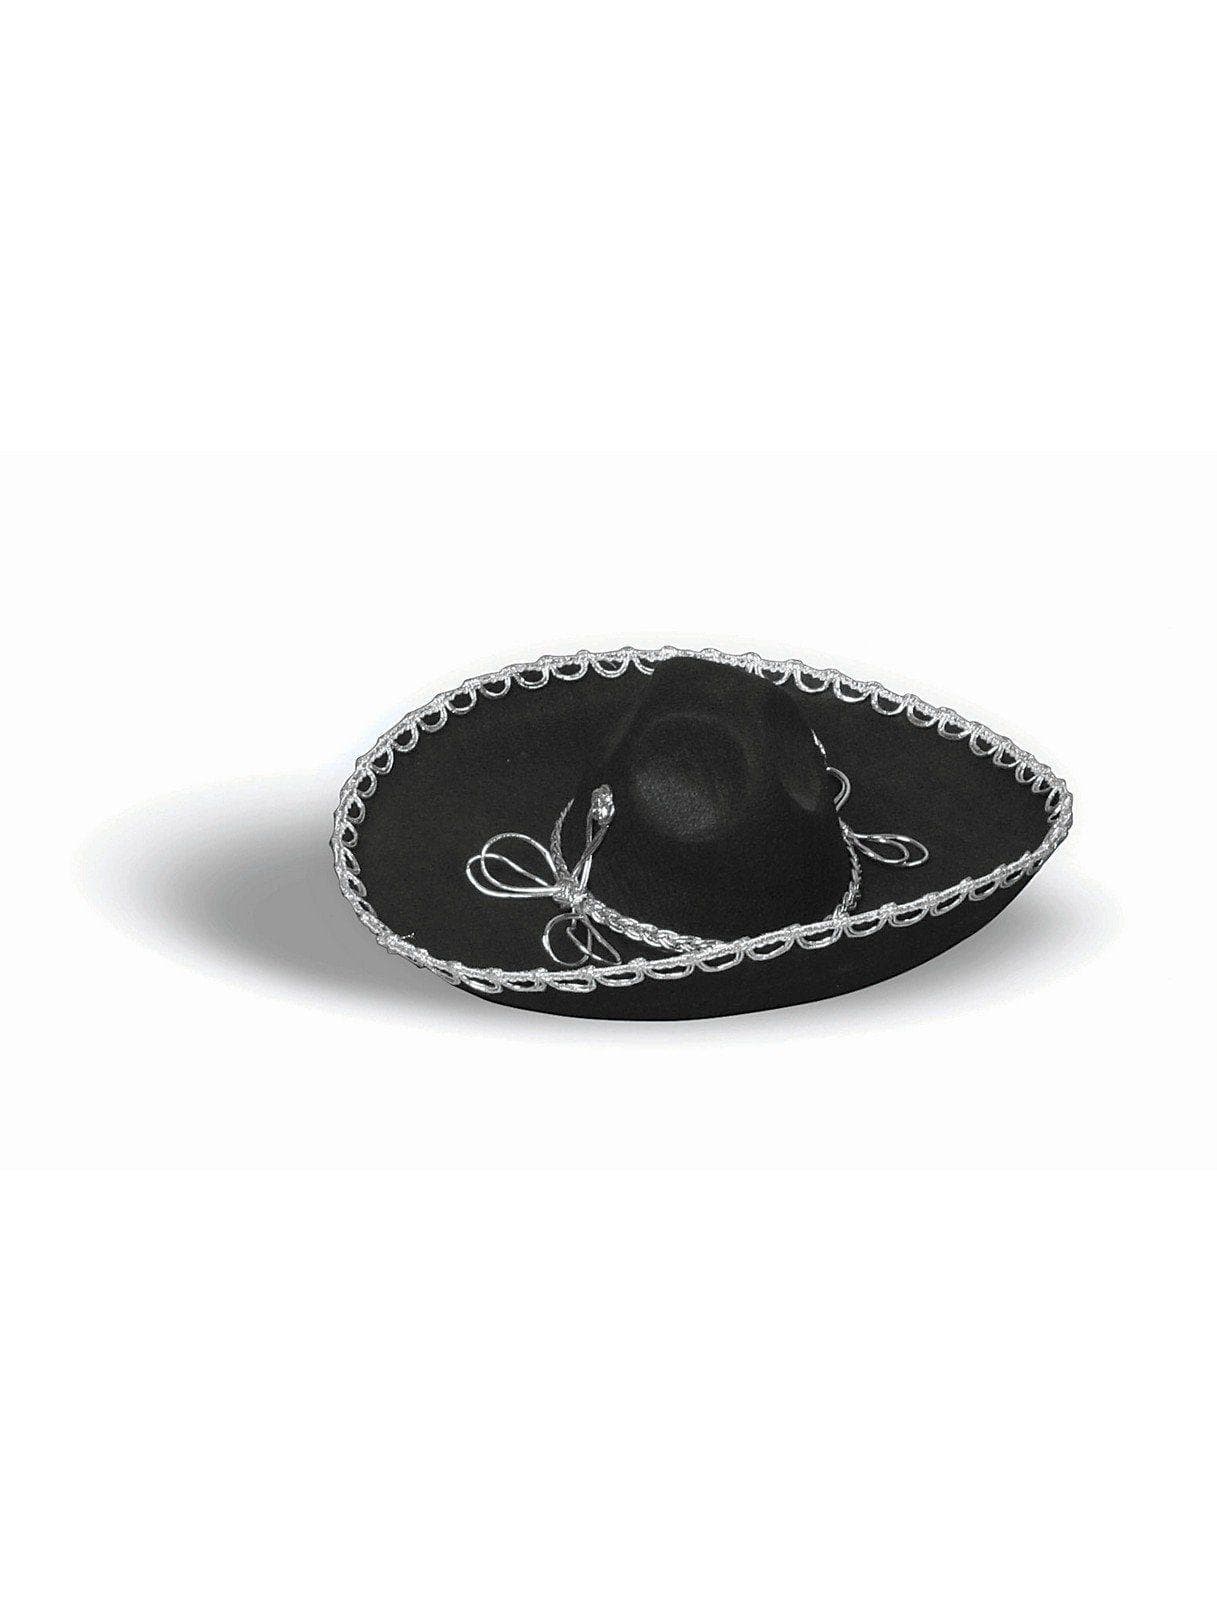 Black Sombrero Hat - costumes.com